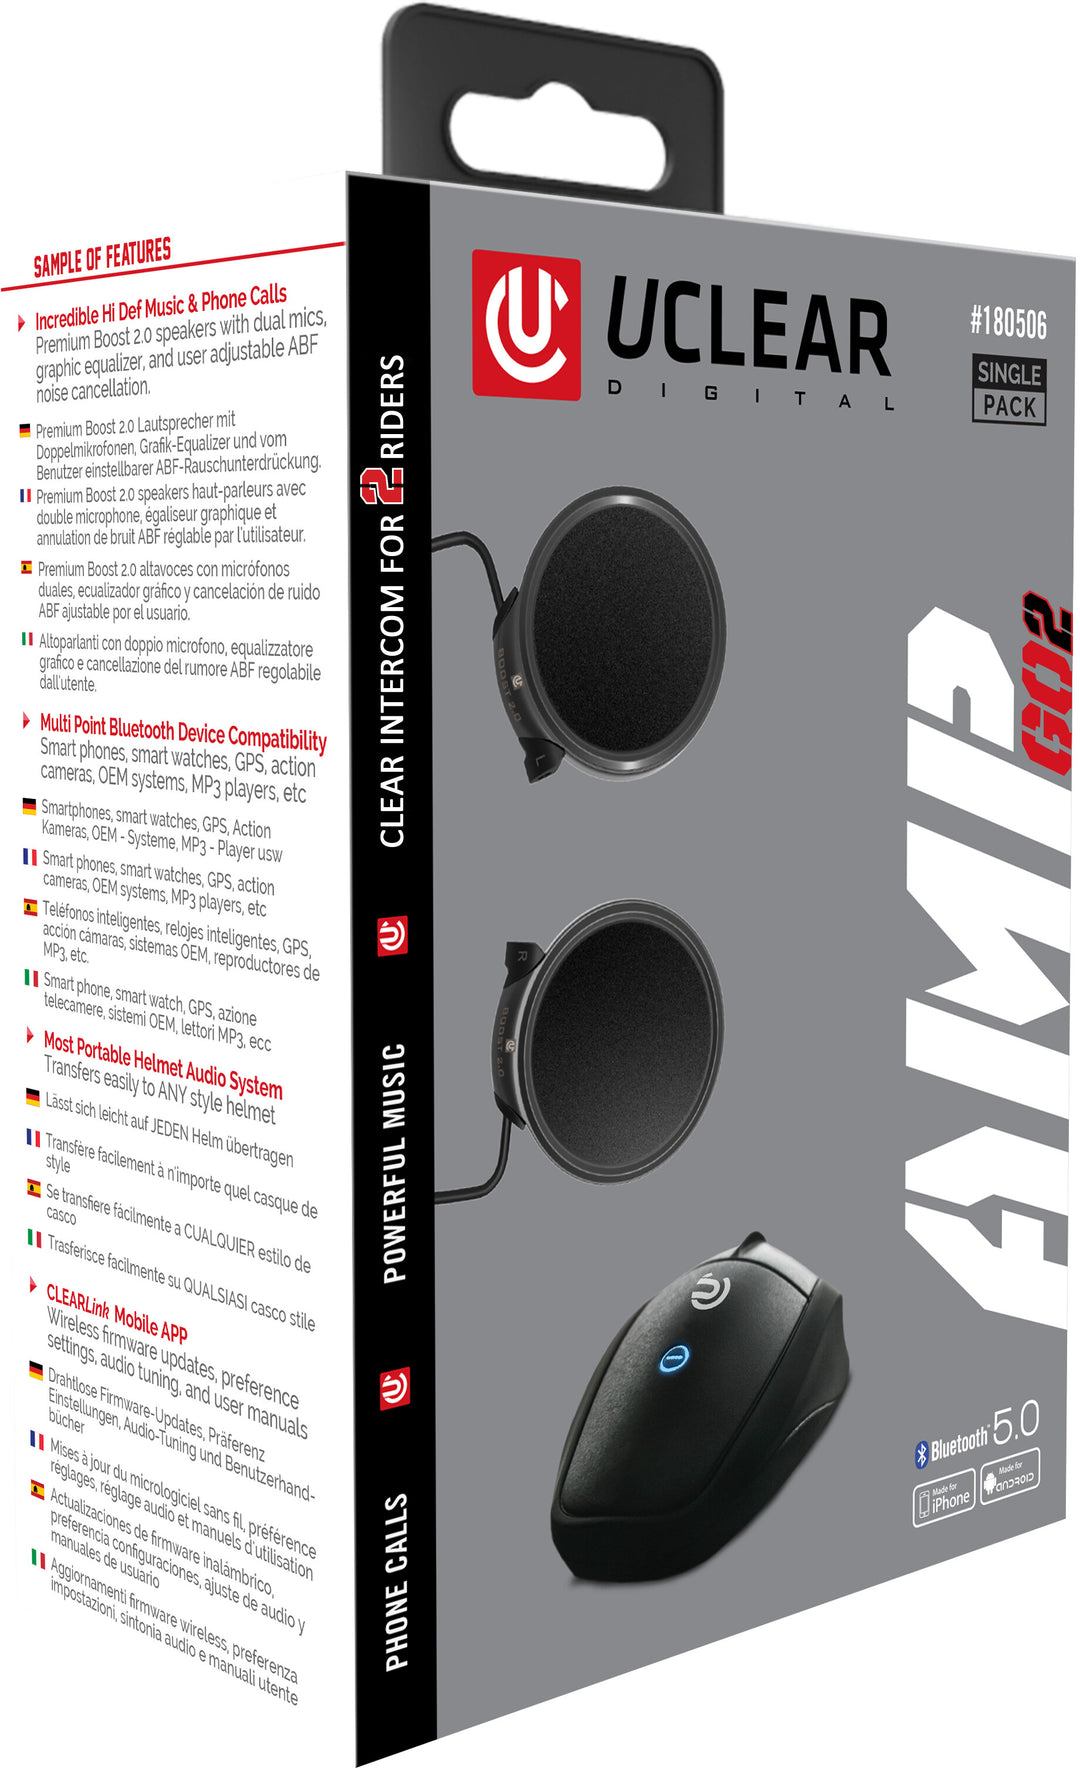 UClear Amp Go 2 Bluetooth Helmet Audio System